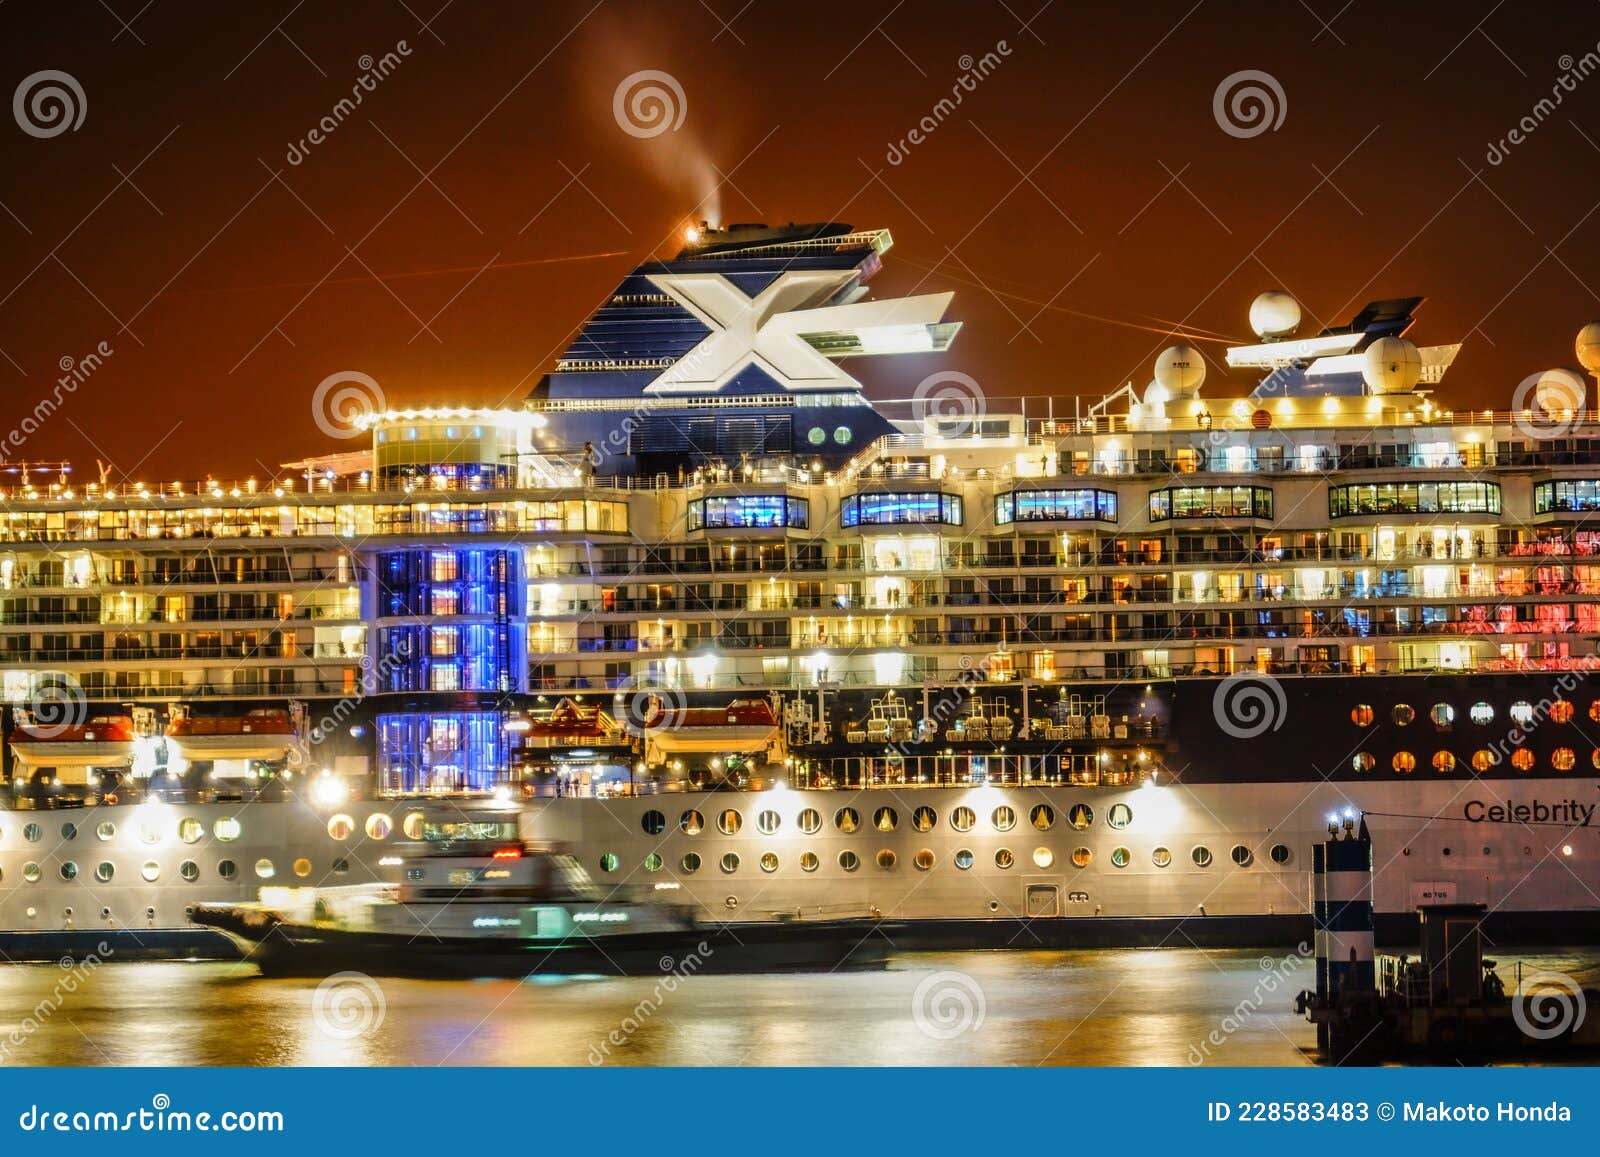 celebrity cruise yokohama port